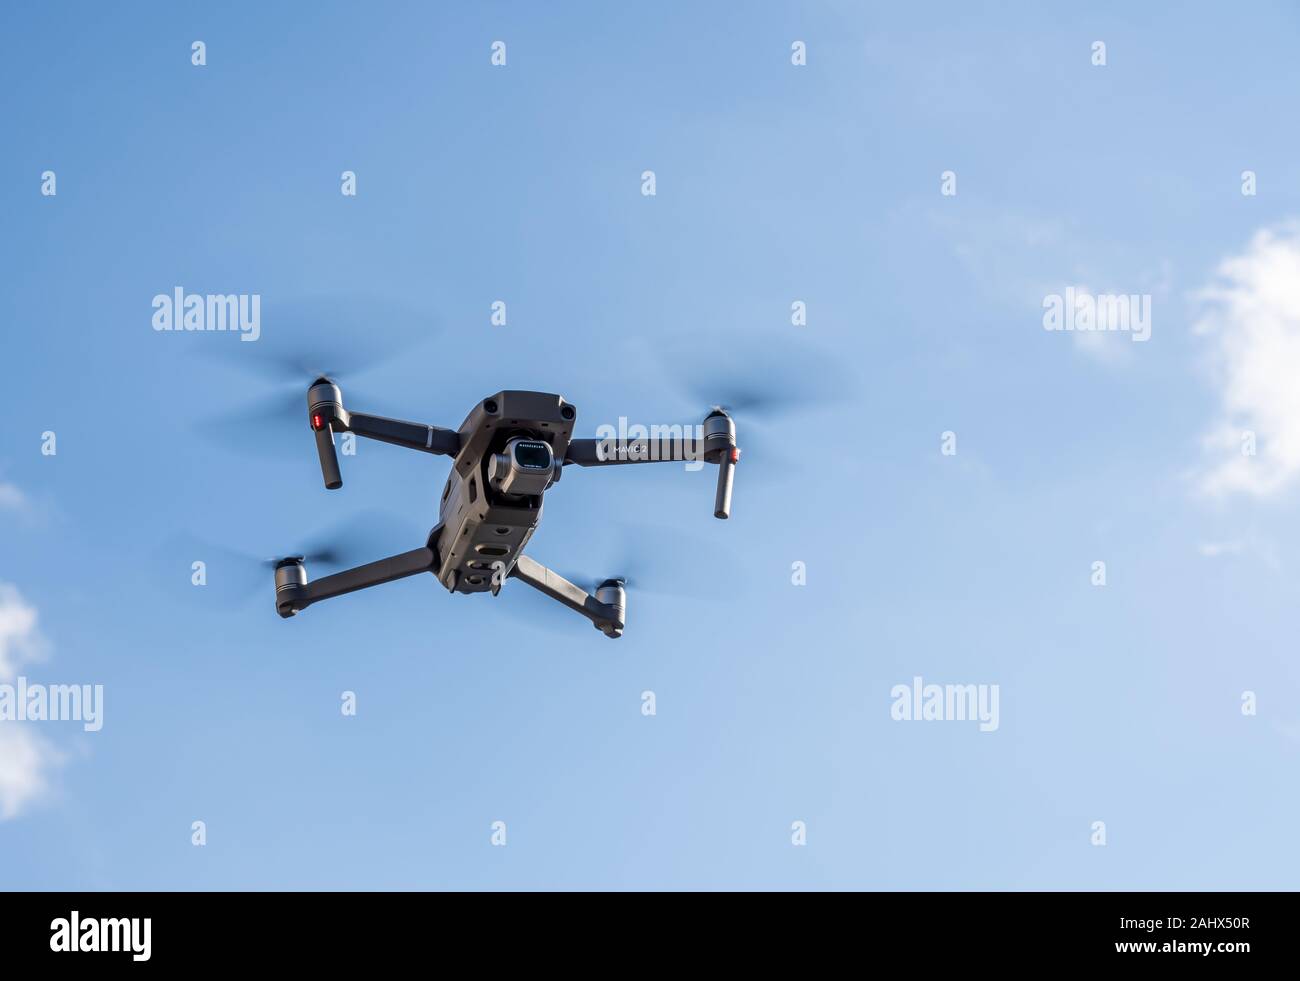 Morgantown, WV - 1 January 2020: DJI Mavic 2 Pro quadcopter or drone hovering in bright blue sky Stock Photo